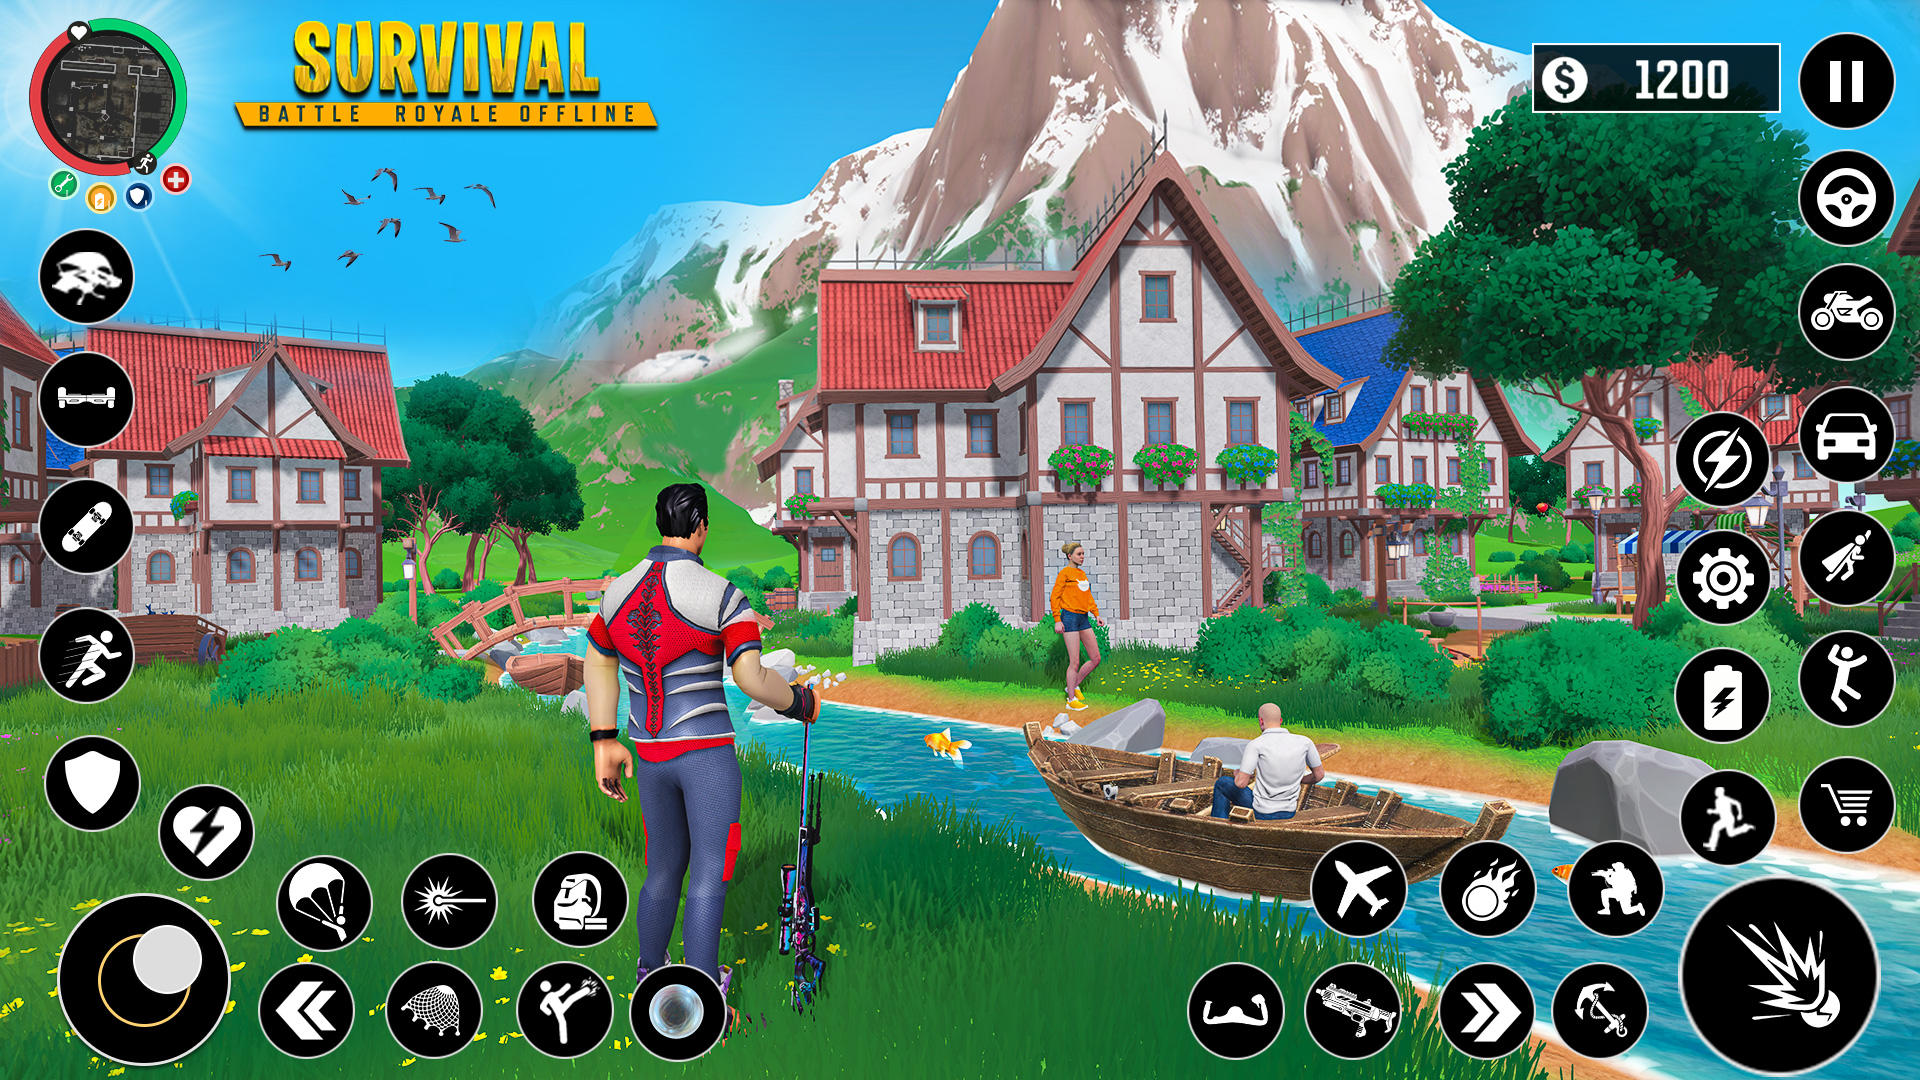 Survival Battle Royale Offline遊戲截圖